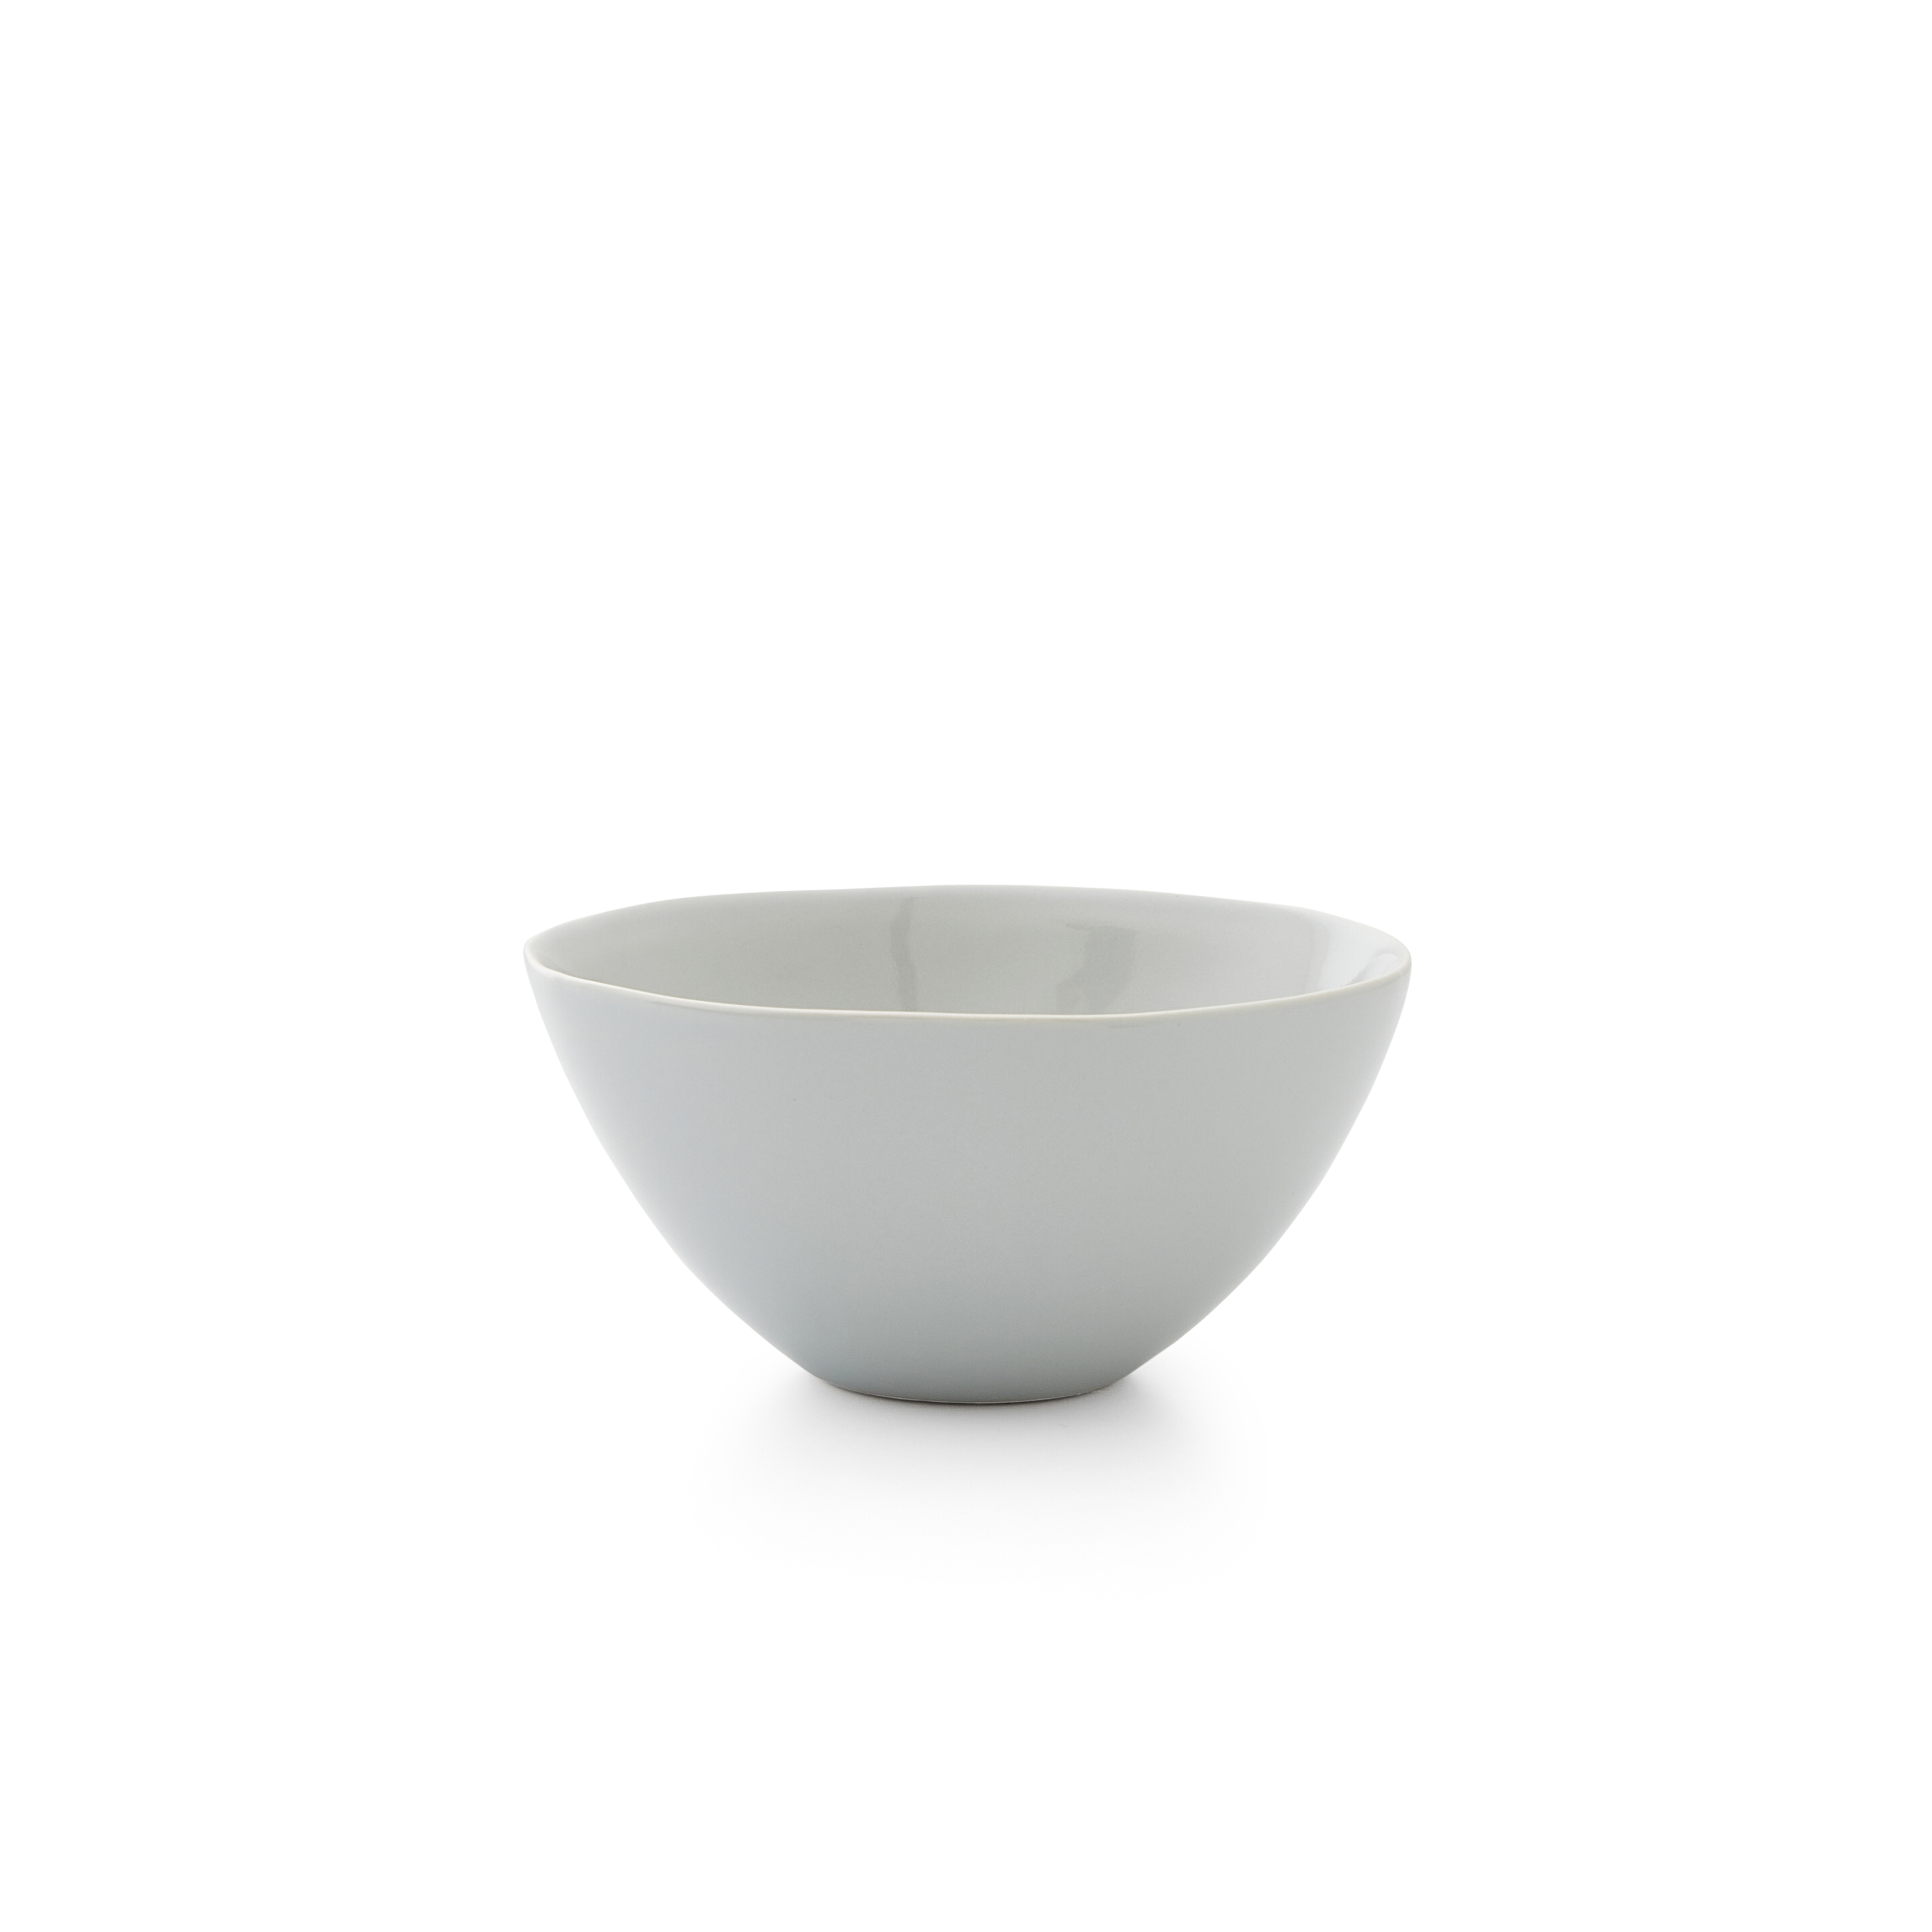 Sophie Conran Arbor bowl, Grey image number null